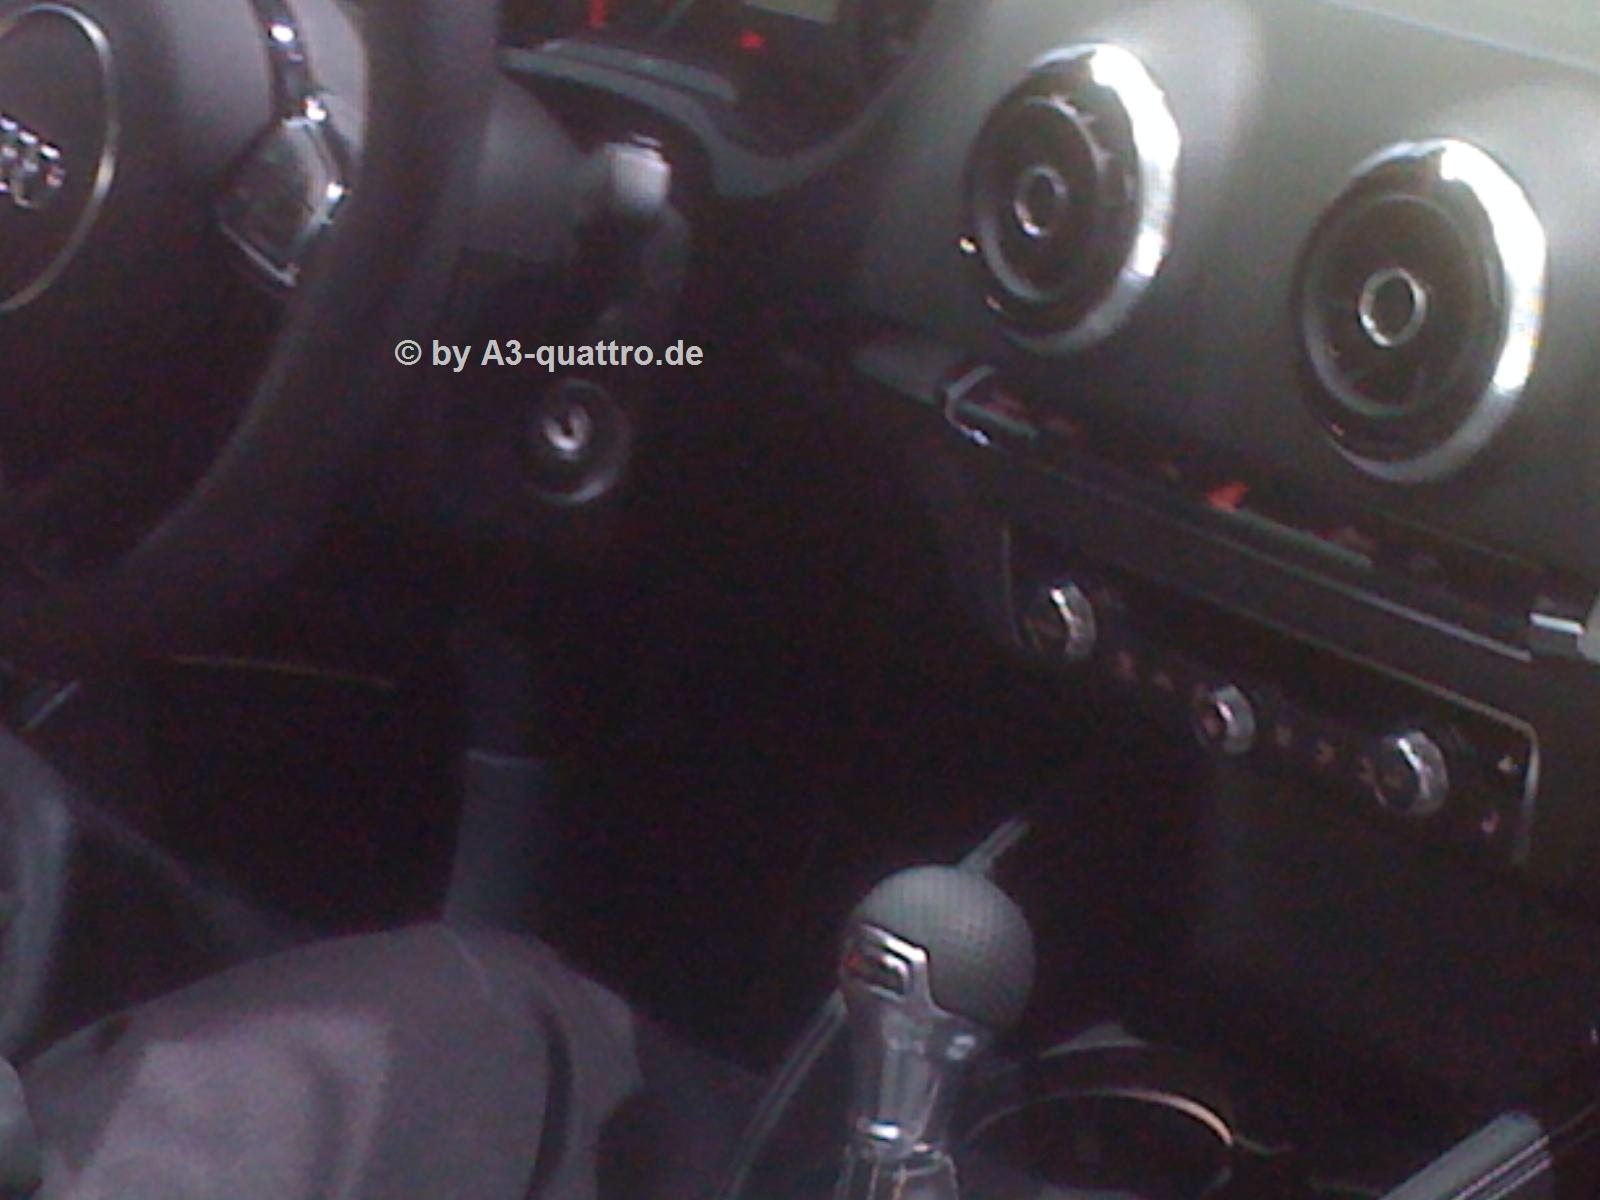 Fichier:2010 Audi A5 (8T) 3.0 TDI quattro Sportback 05.jpg — Wikipédia